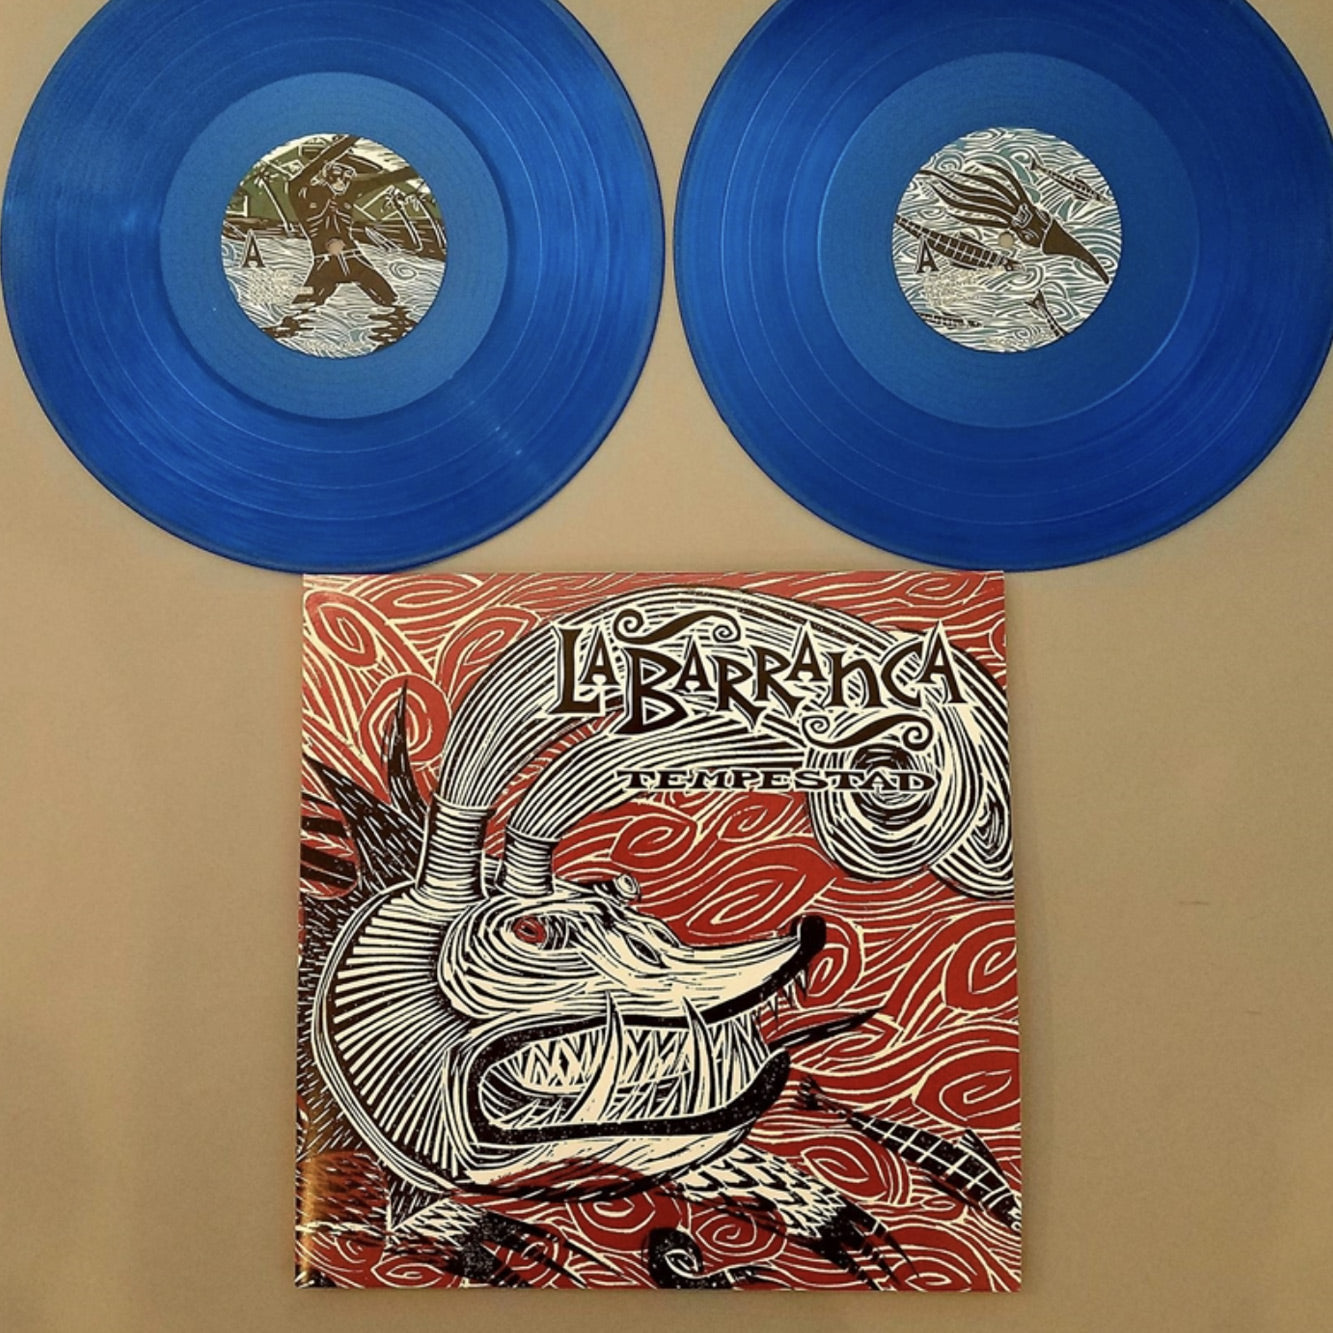 La Barranca - Tempestad (Vinyl) Gatefold!! Doble vinilo azul!! Importado - Edicion limitada!!!